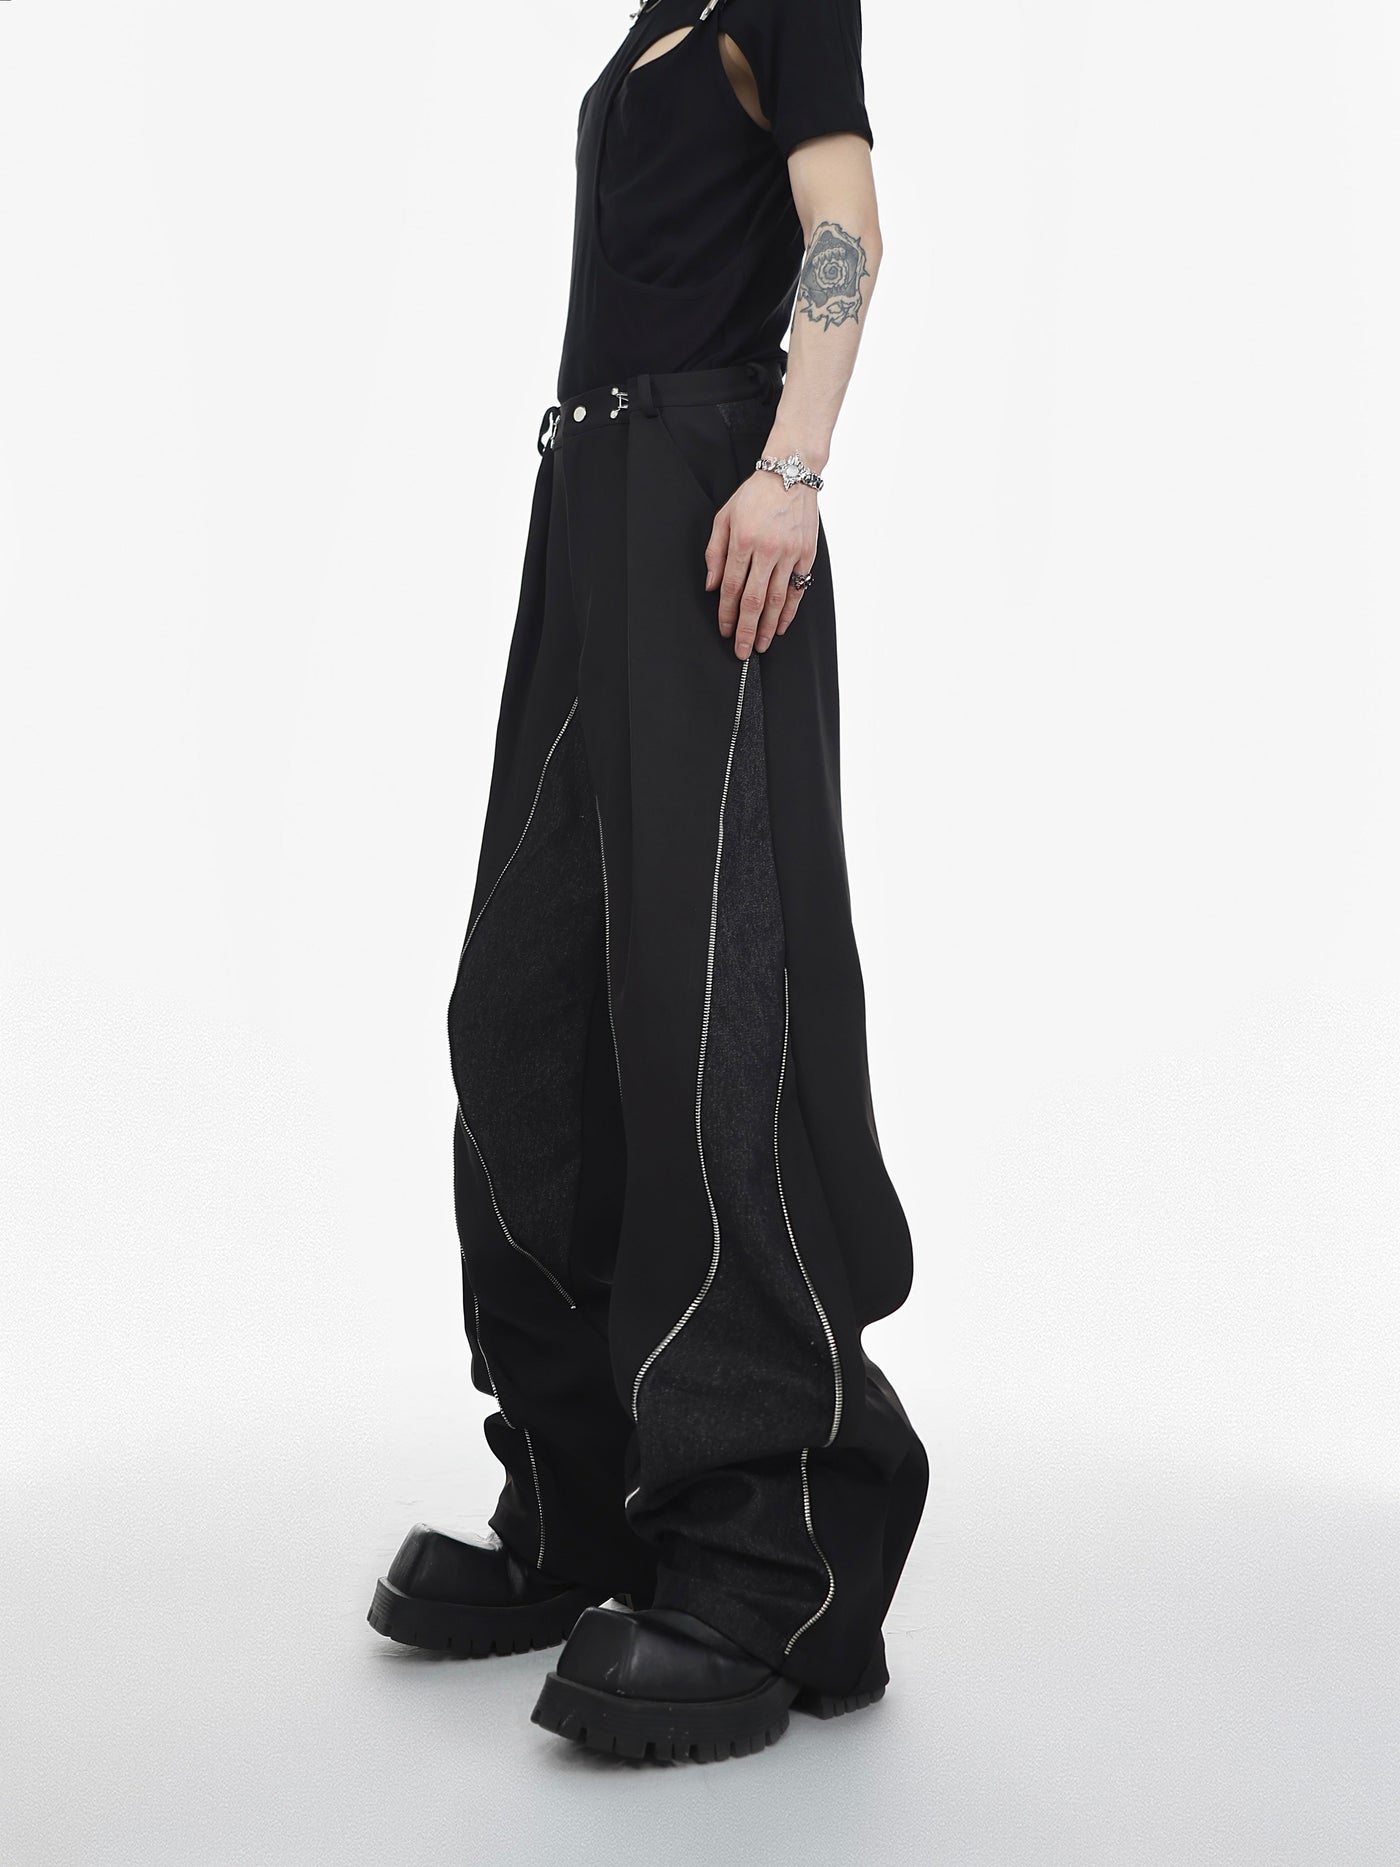 Argue Culture Irregular Metal Zip Stitched Trousers Korean Street Fashion Pants By Argue Culture Shop Online at OH Vault